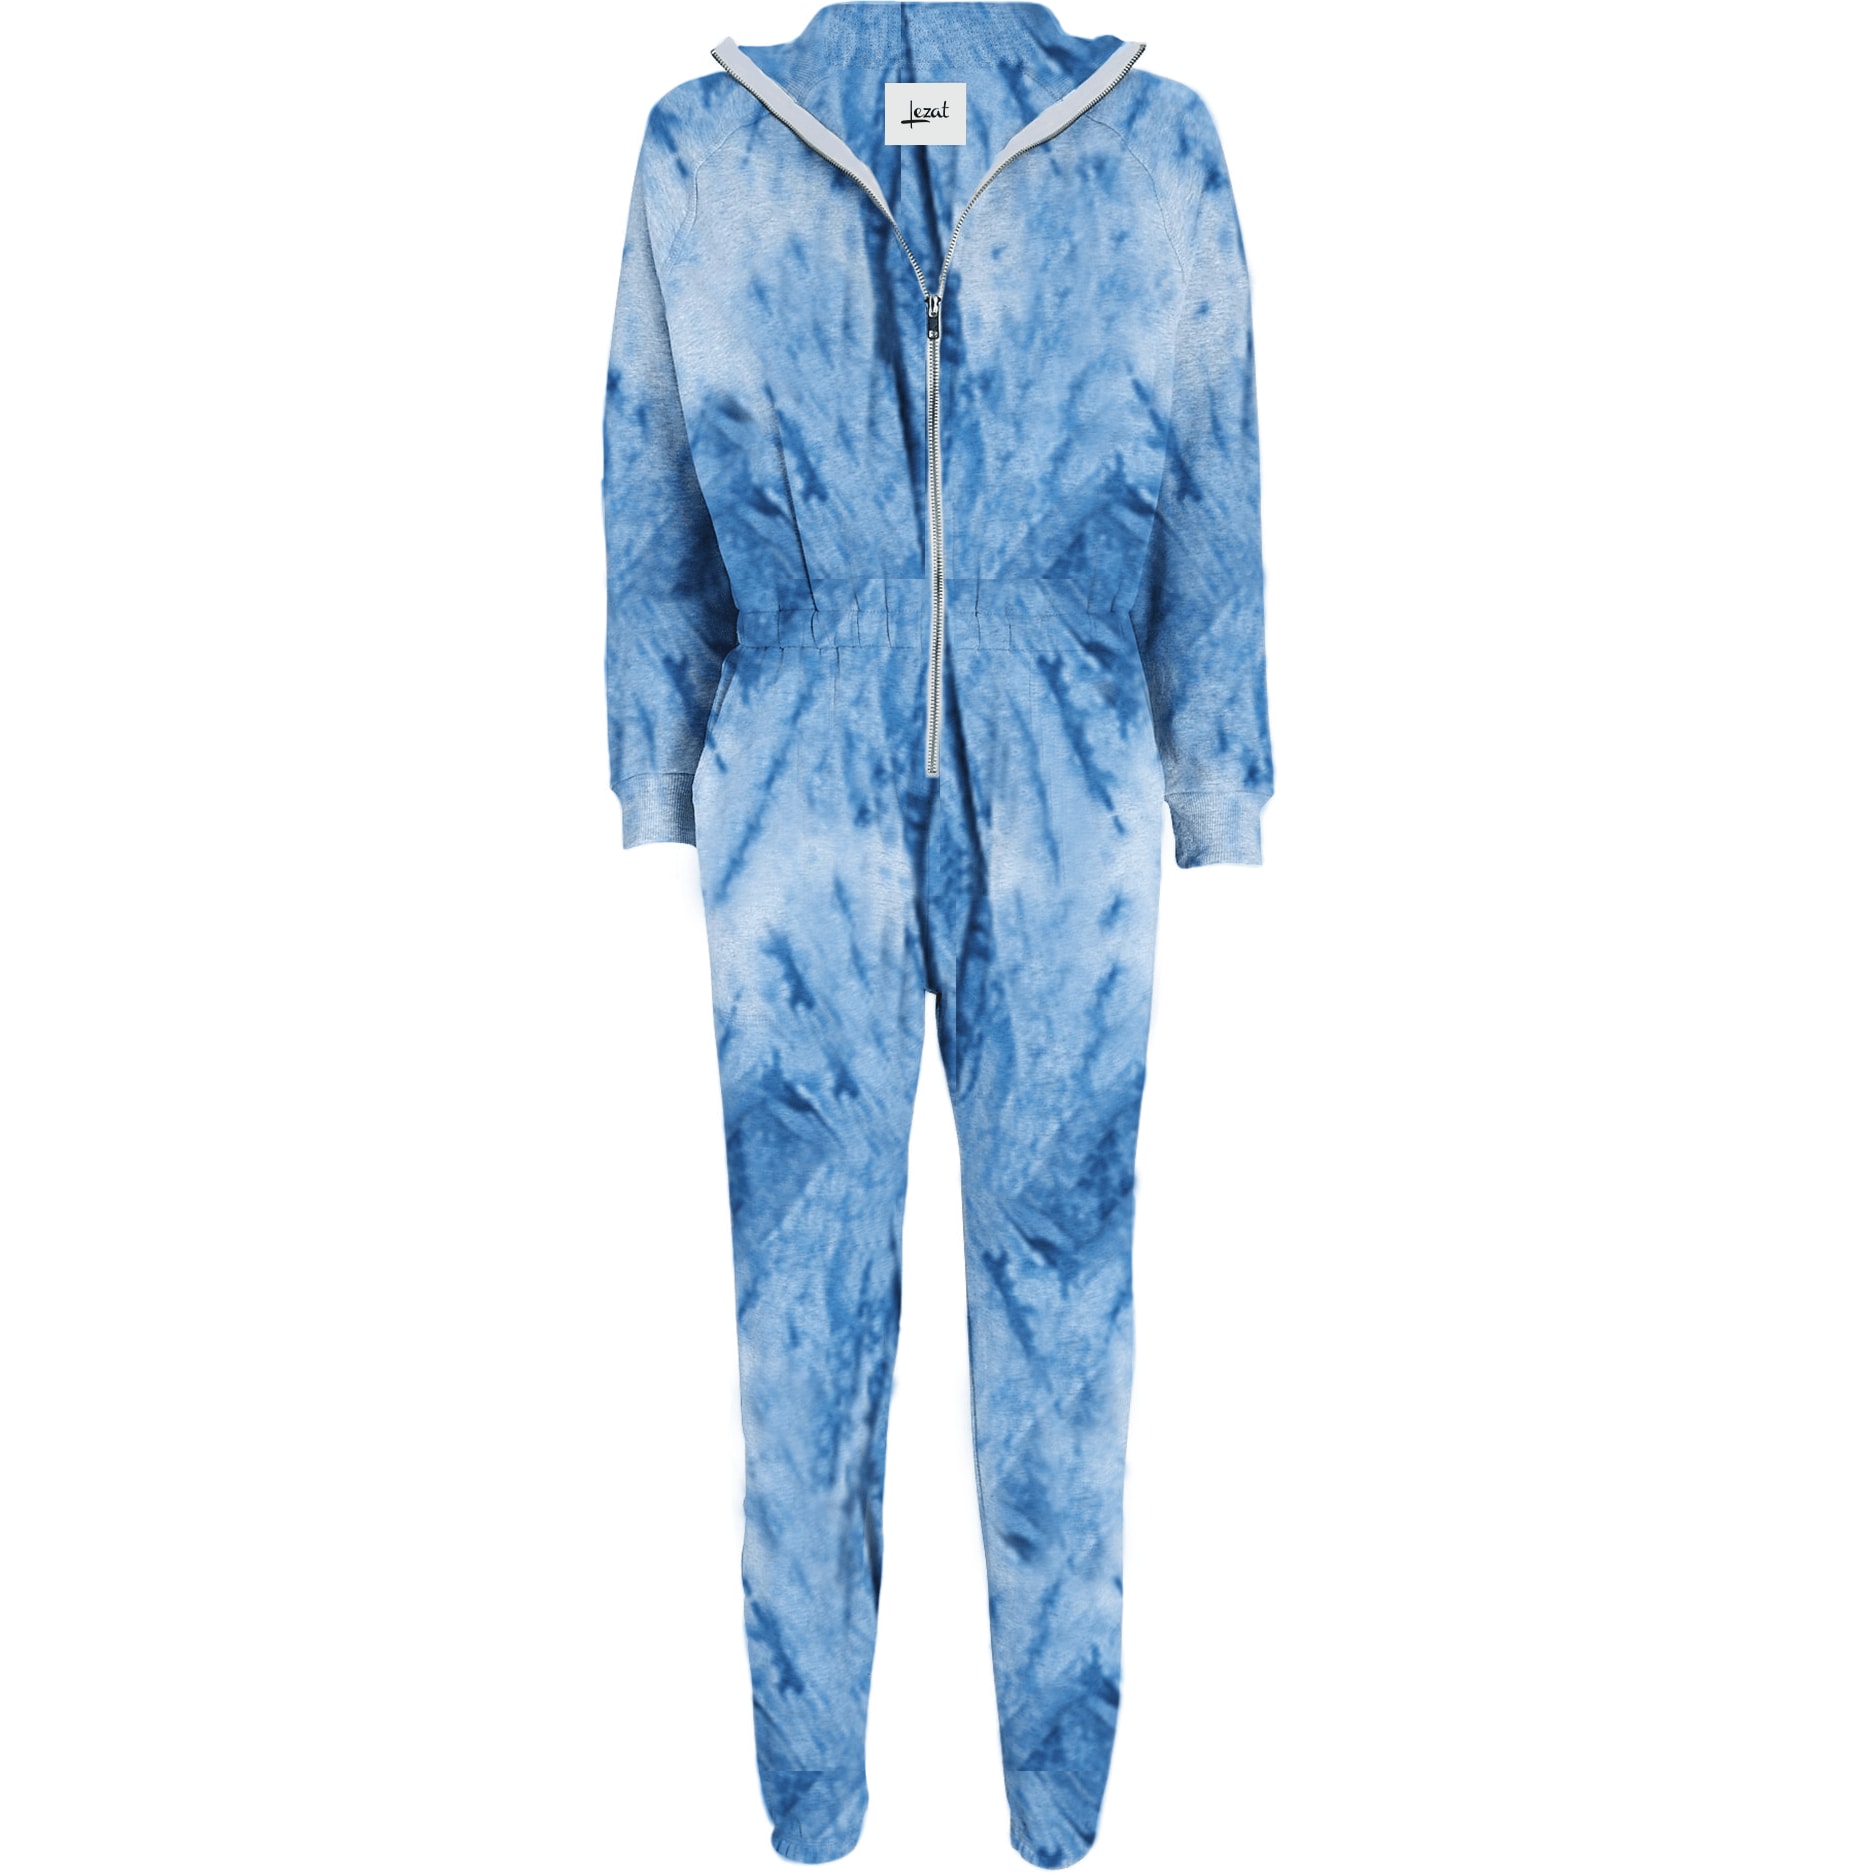 Women's Restore Soft Terry Jumpsuit - Dusty Blue Tie Dye Extra Small Lezat